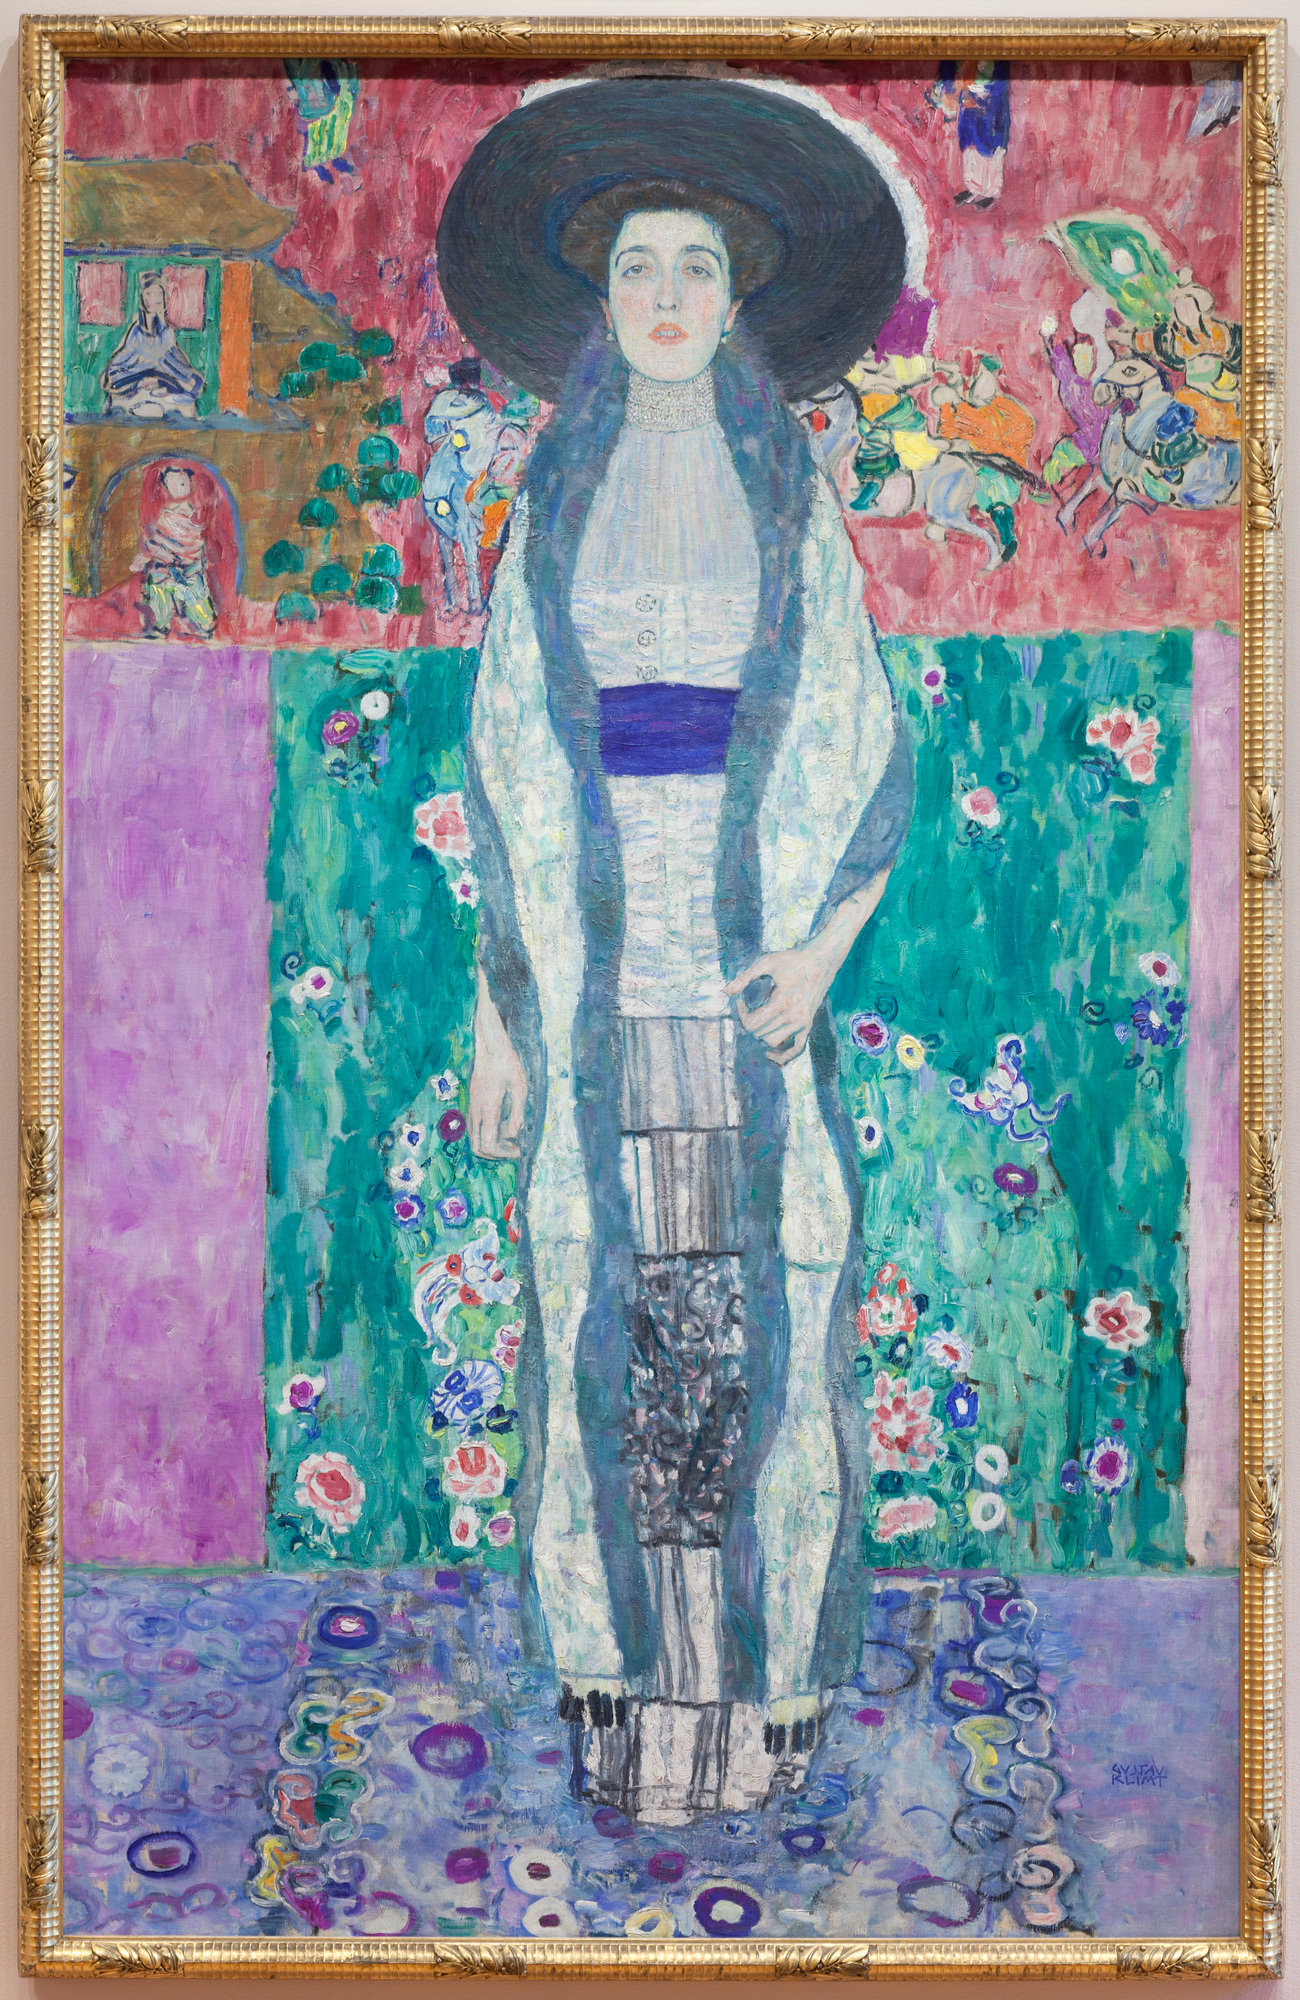 Adele Bloch Bauer II by Gustav Klimt - 1912 - 190 x 120 cm private collection